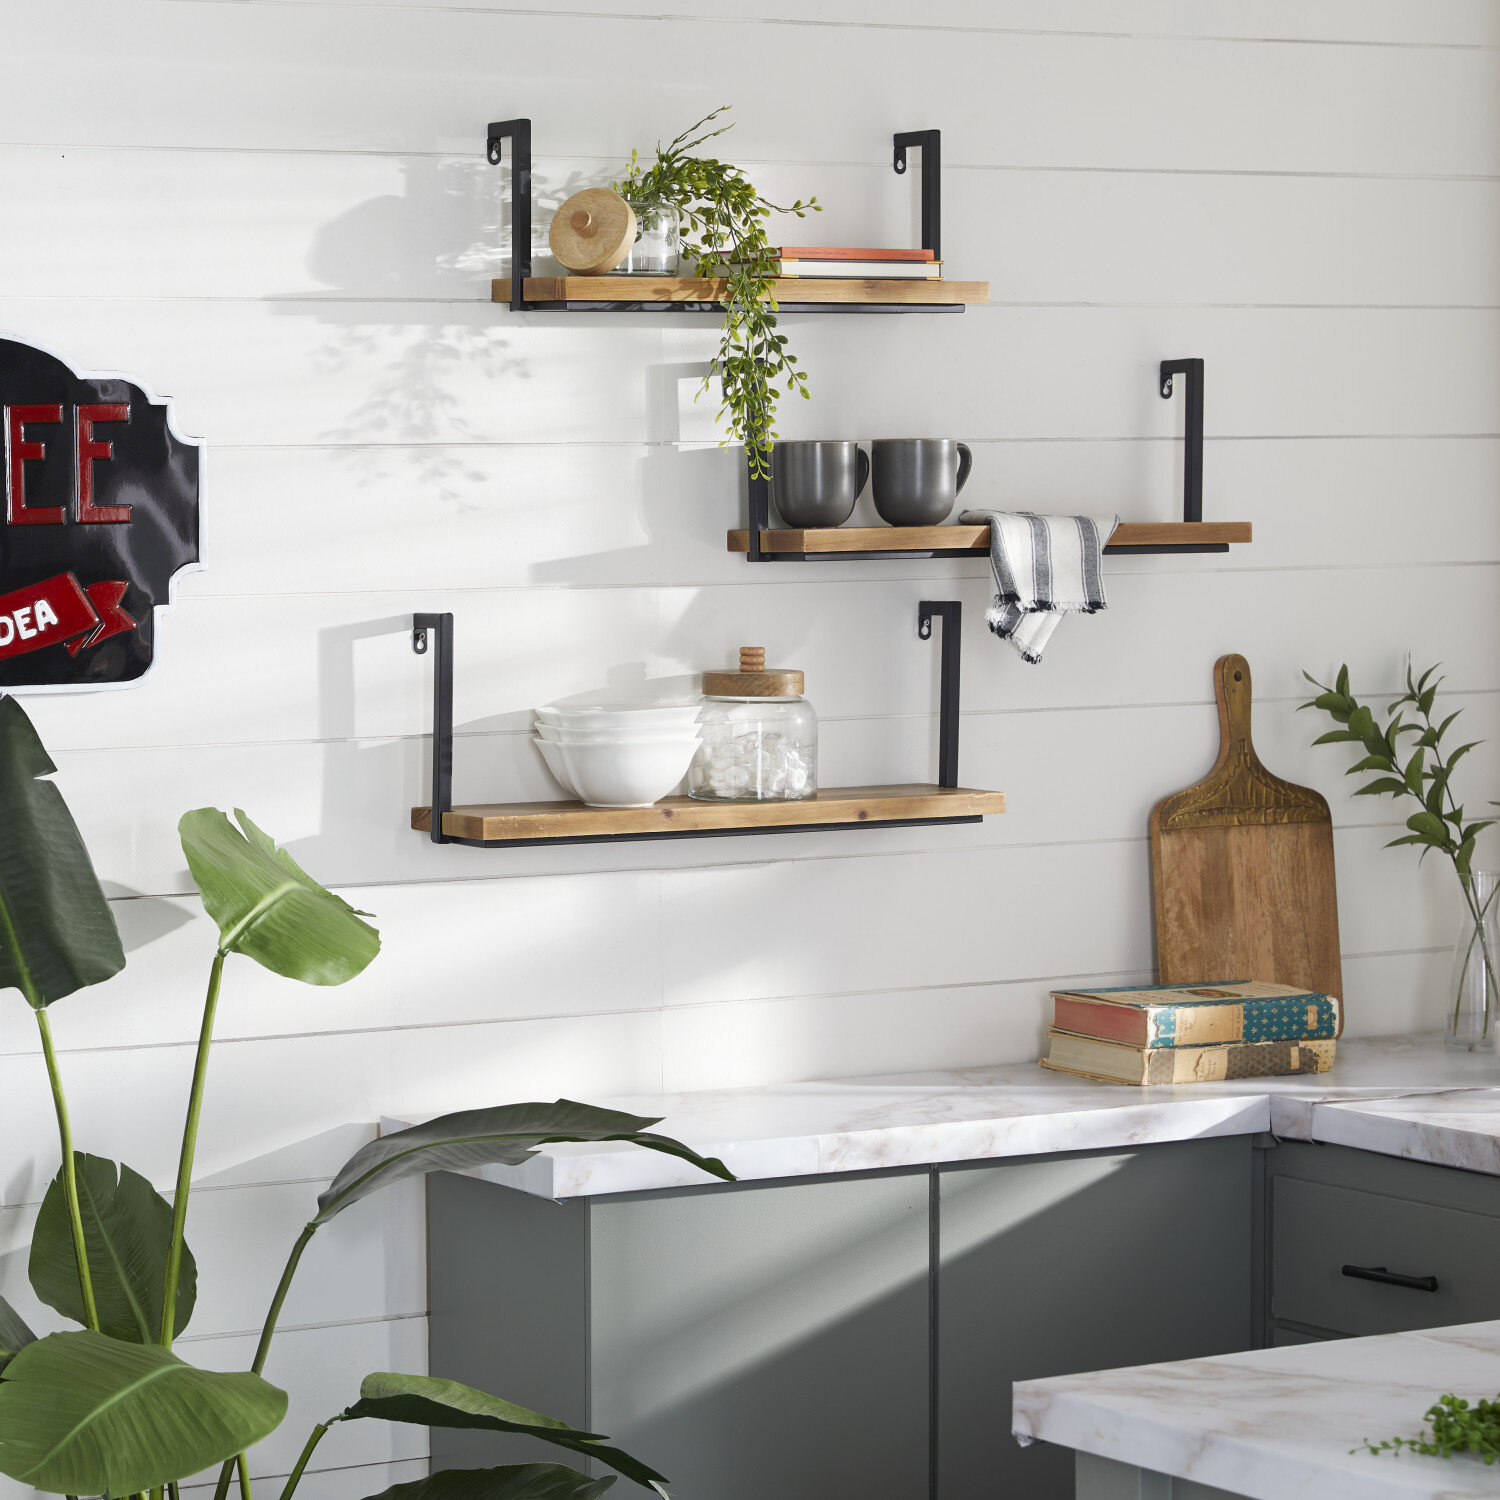 8 Stylish Floating Kitchen Shelf Design Ideas for Storage